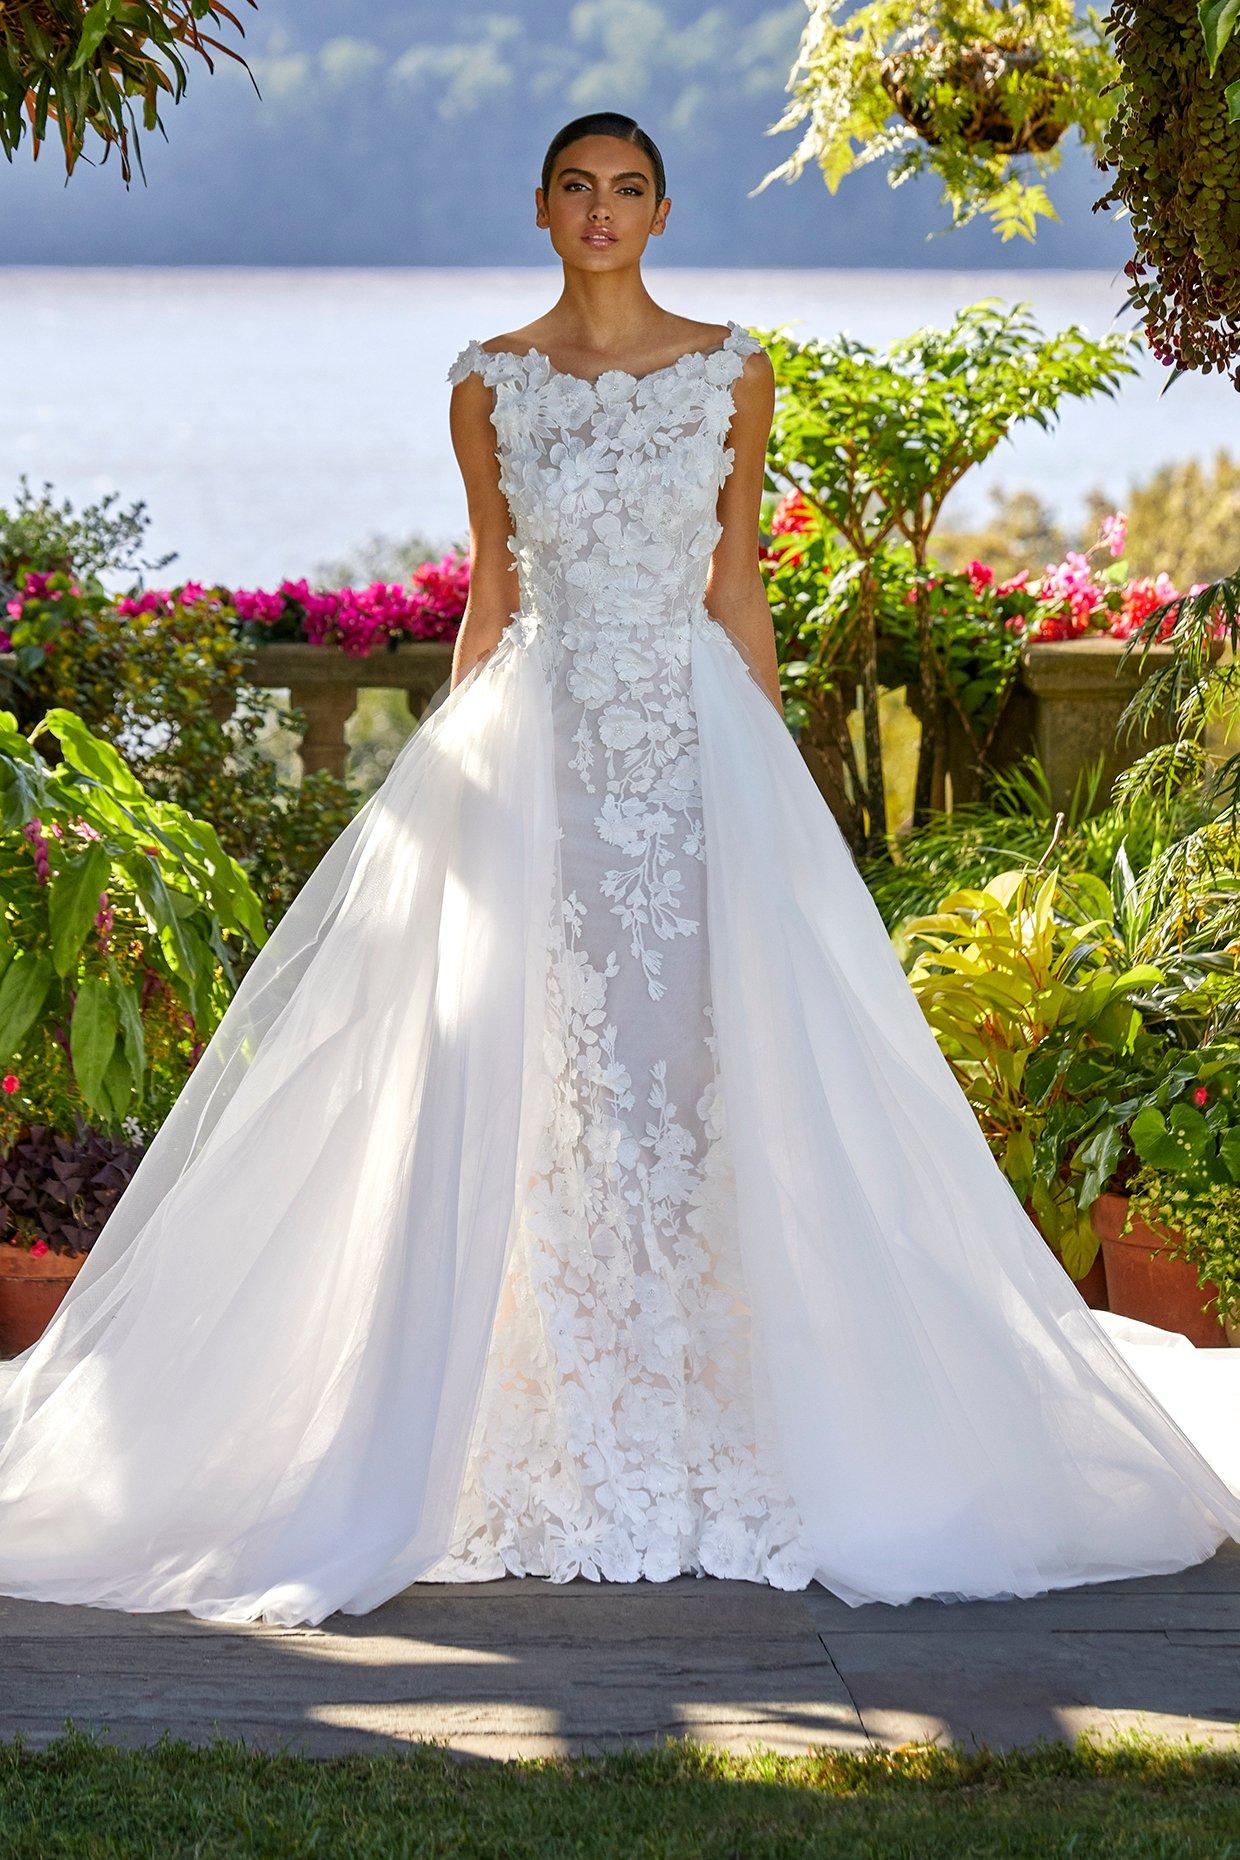 8 tipos de cauda para el vestido de novia, ¡conócelas! - bodas.com.mx